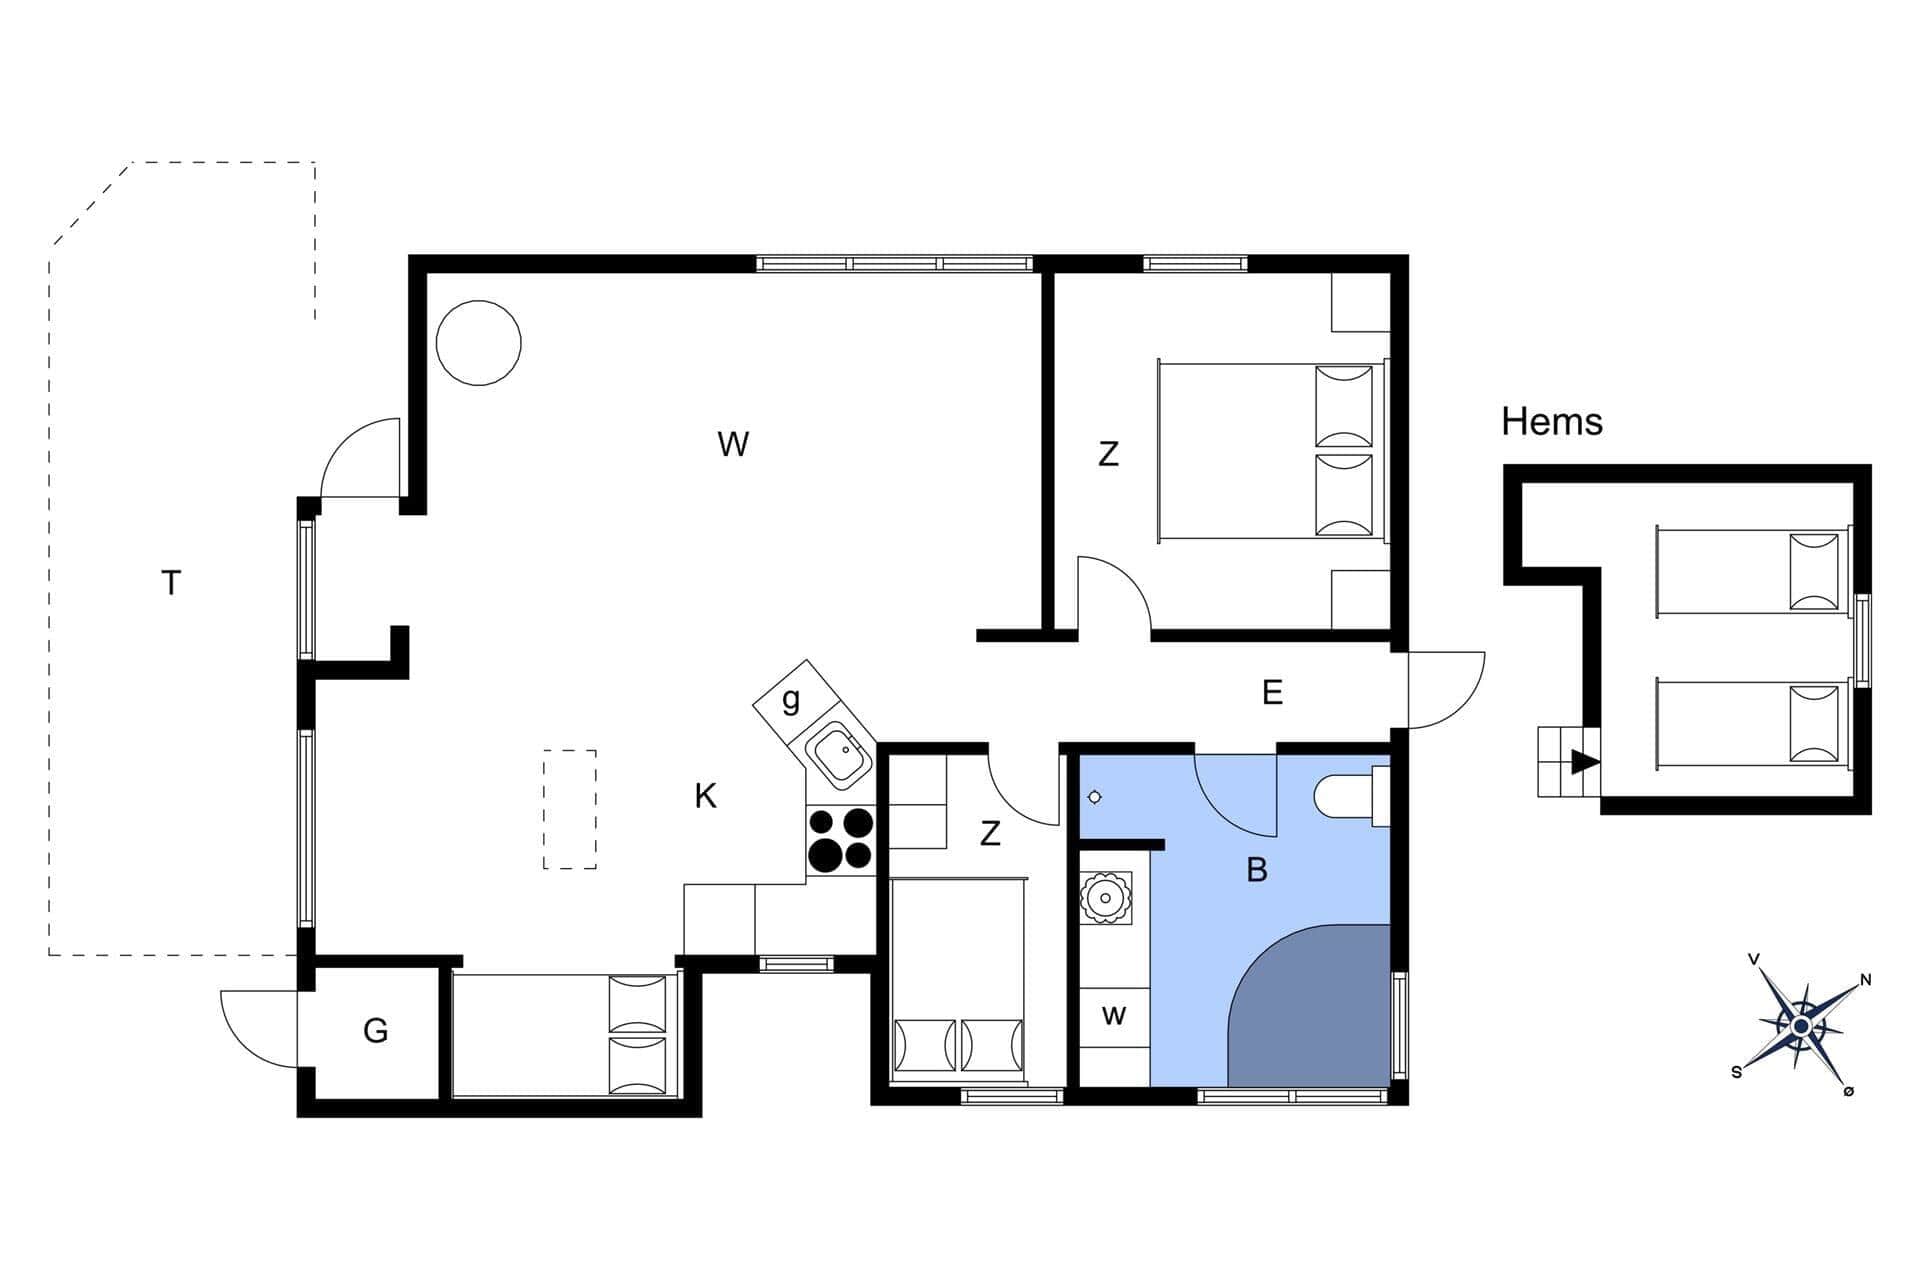 Interior 0-401 Holiday-home HA255, Torndalstrand 2, DK - 9370 Hals